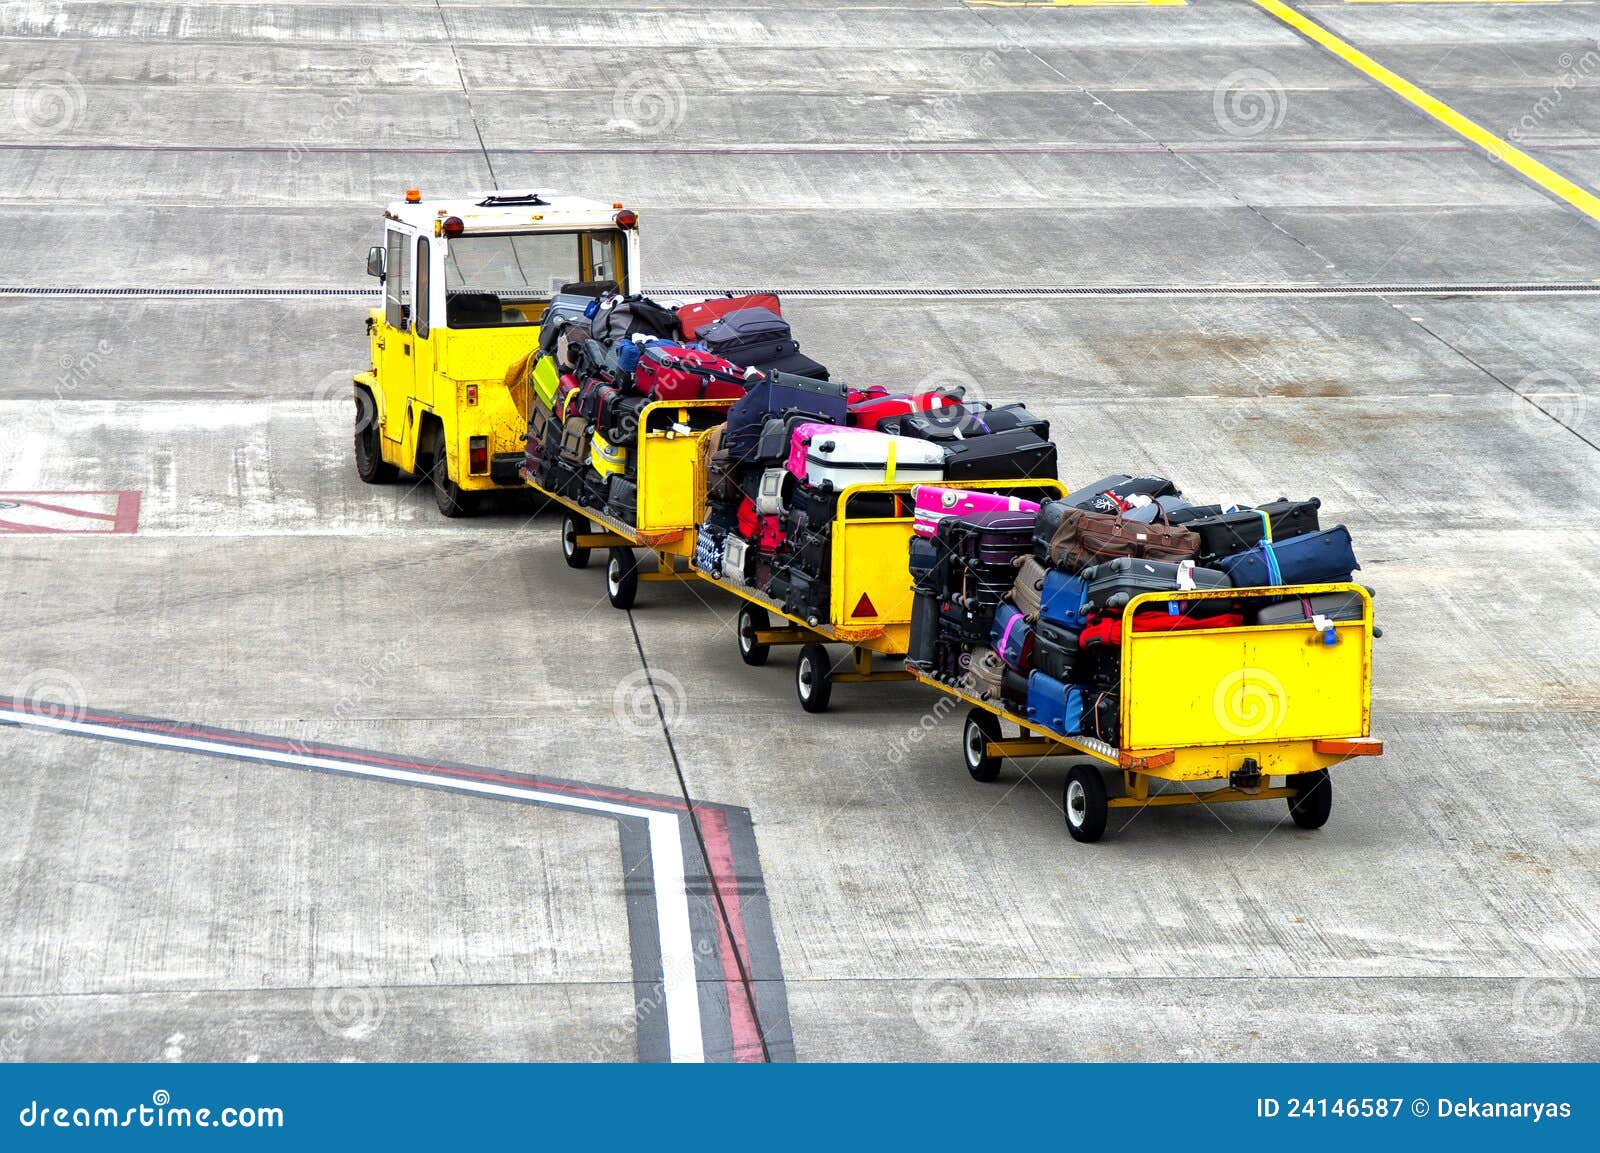 baggage cars at an airport terminal.